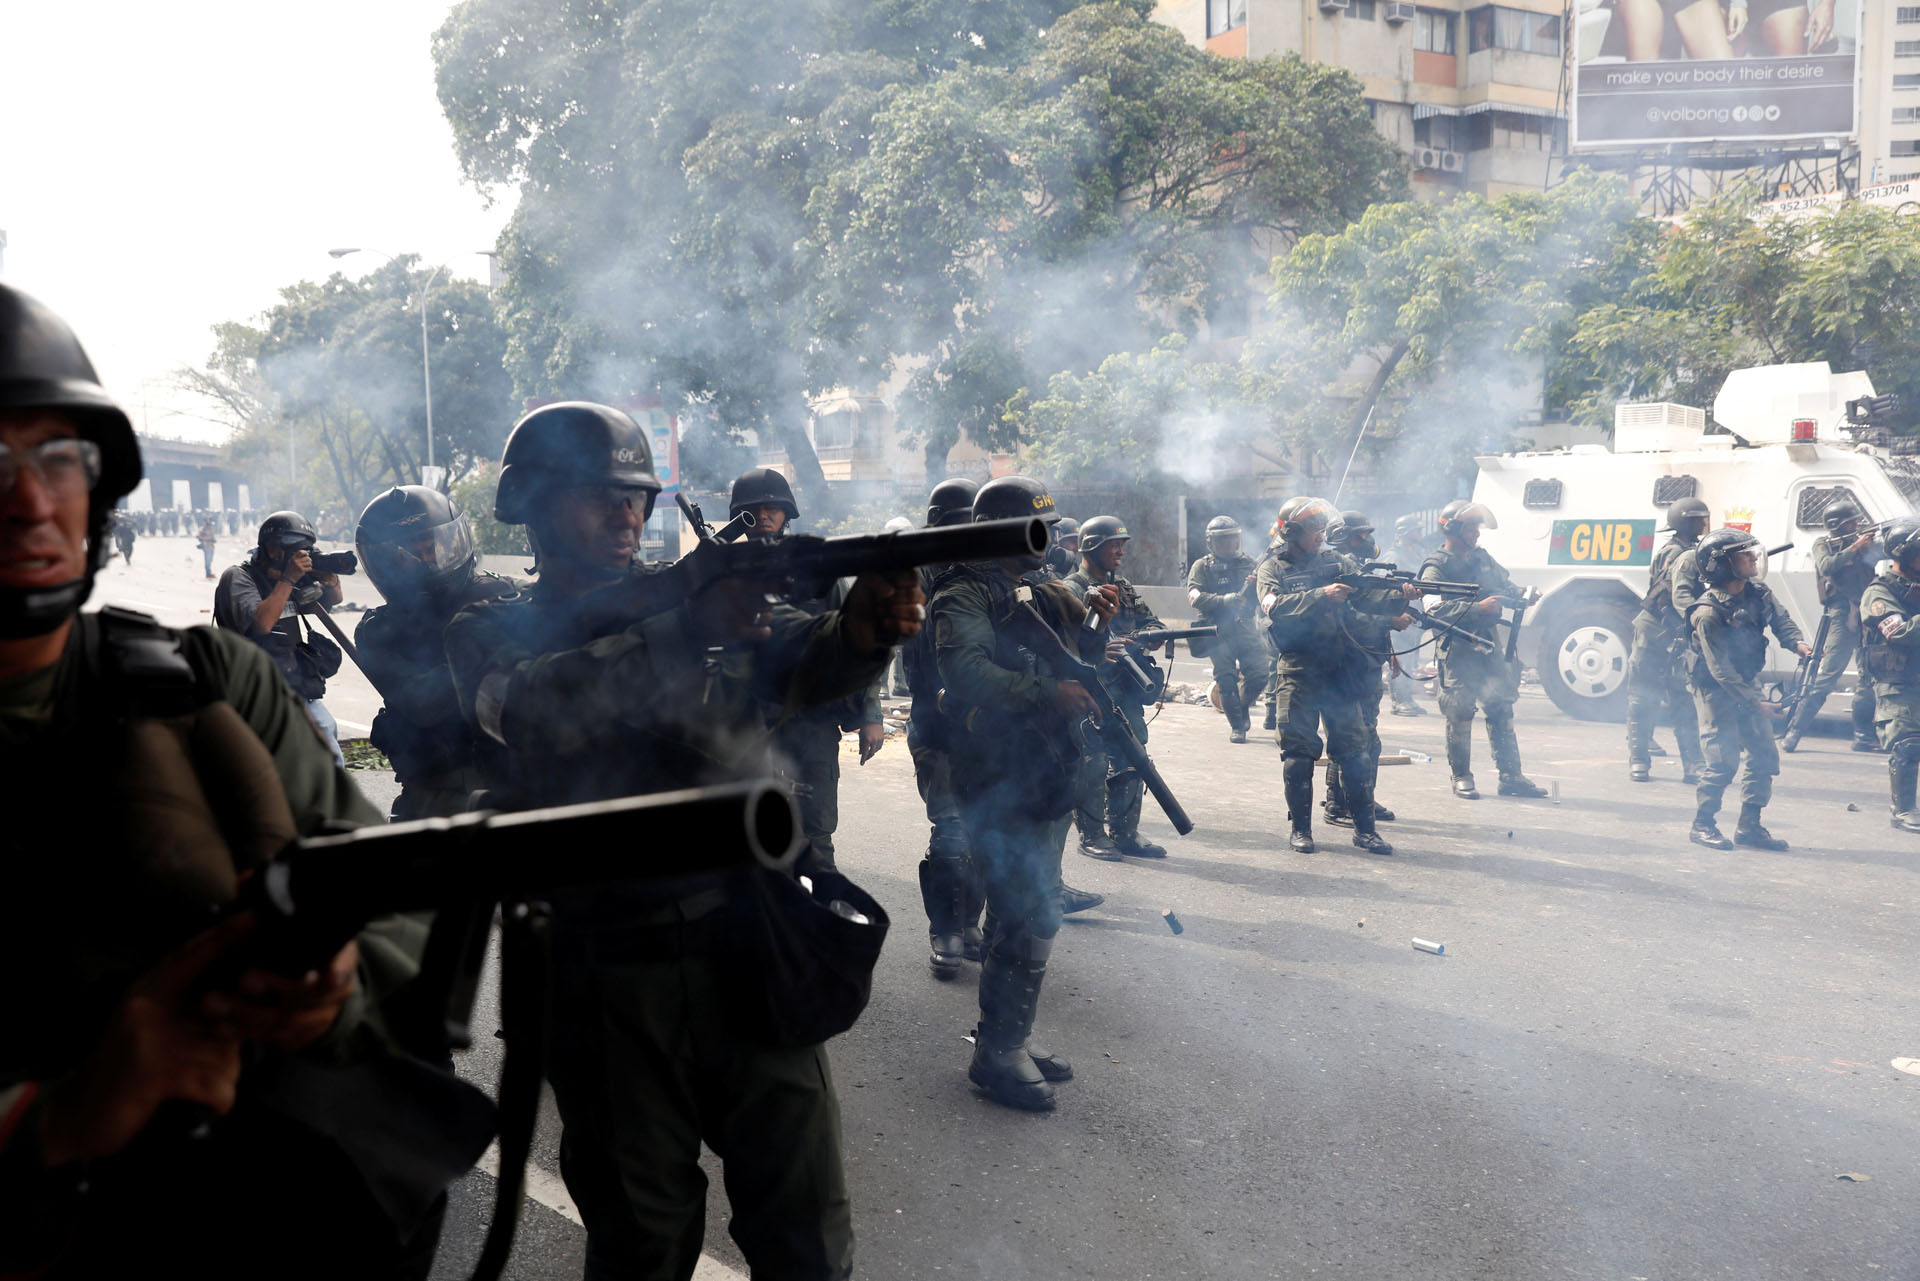 Venezuelan national guard fire tear gas towards demonstrators during an opposition rally in Caracas, Venezuela, April 6, 2017. REUTERS/Carlos Garcia Rawlins